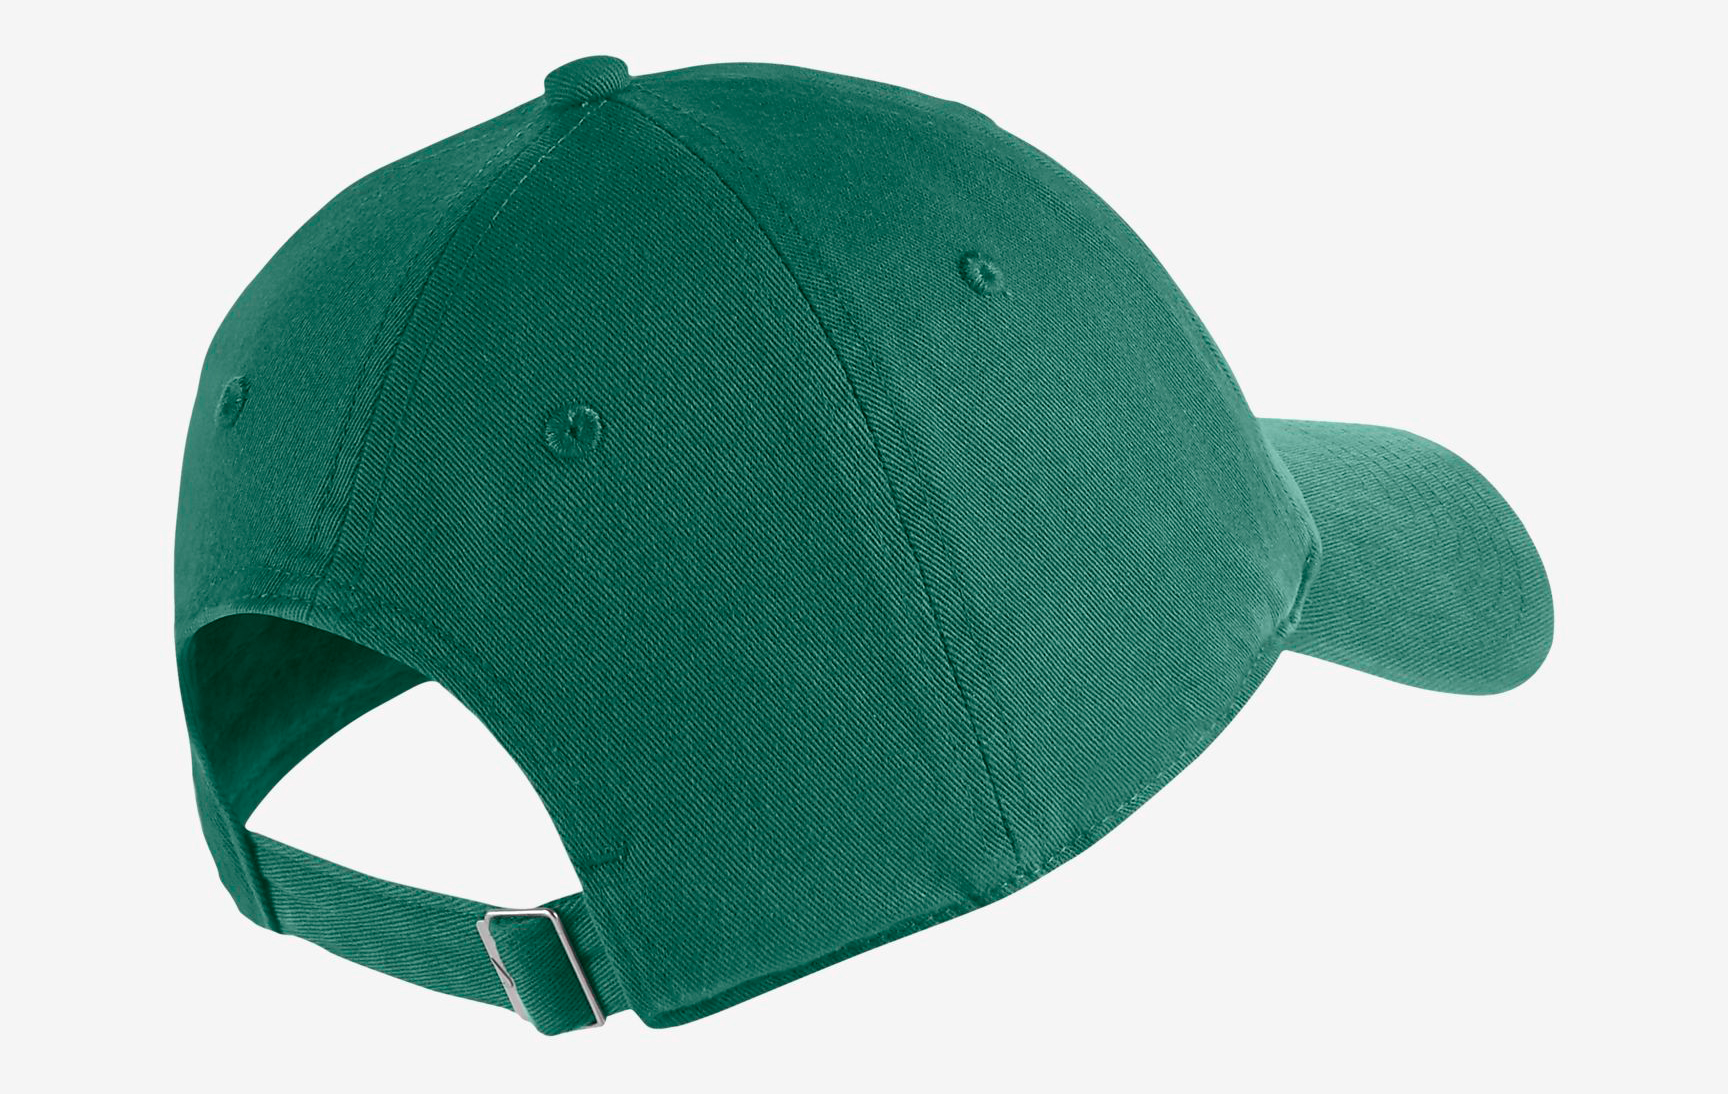 nike watermelon south beach hat match green 2